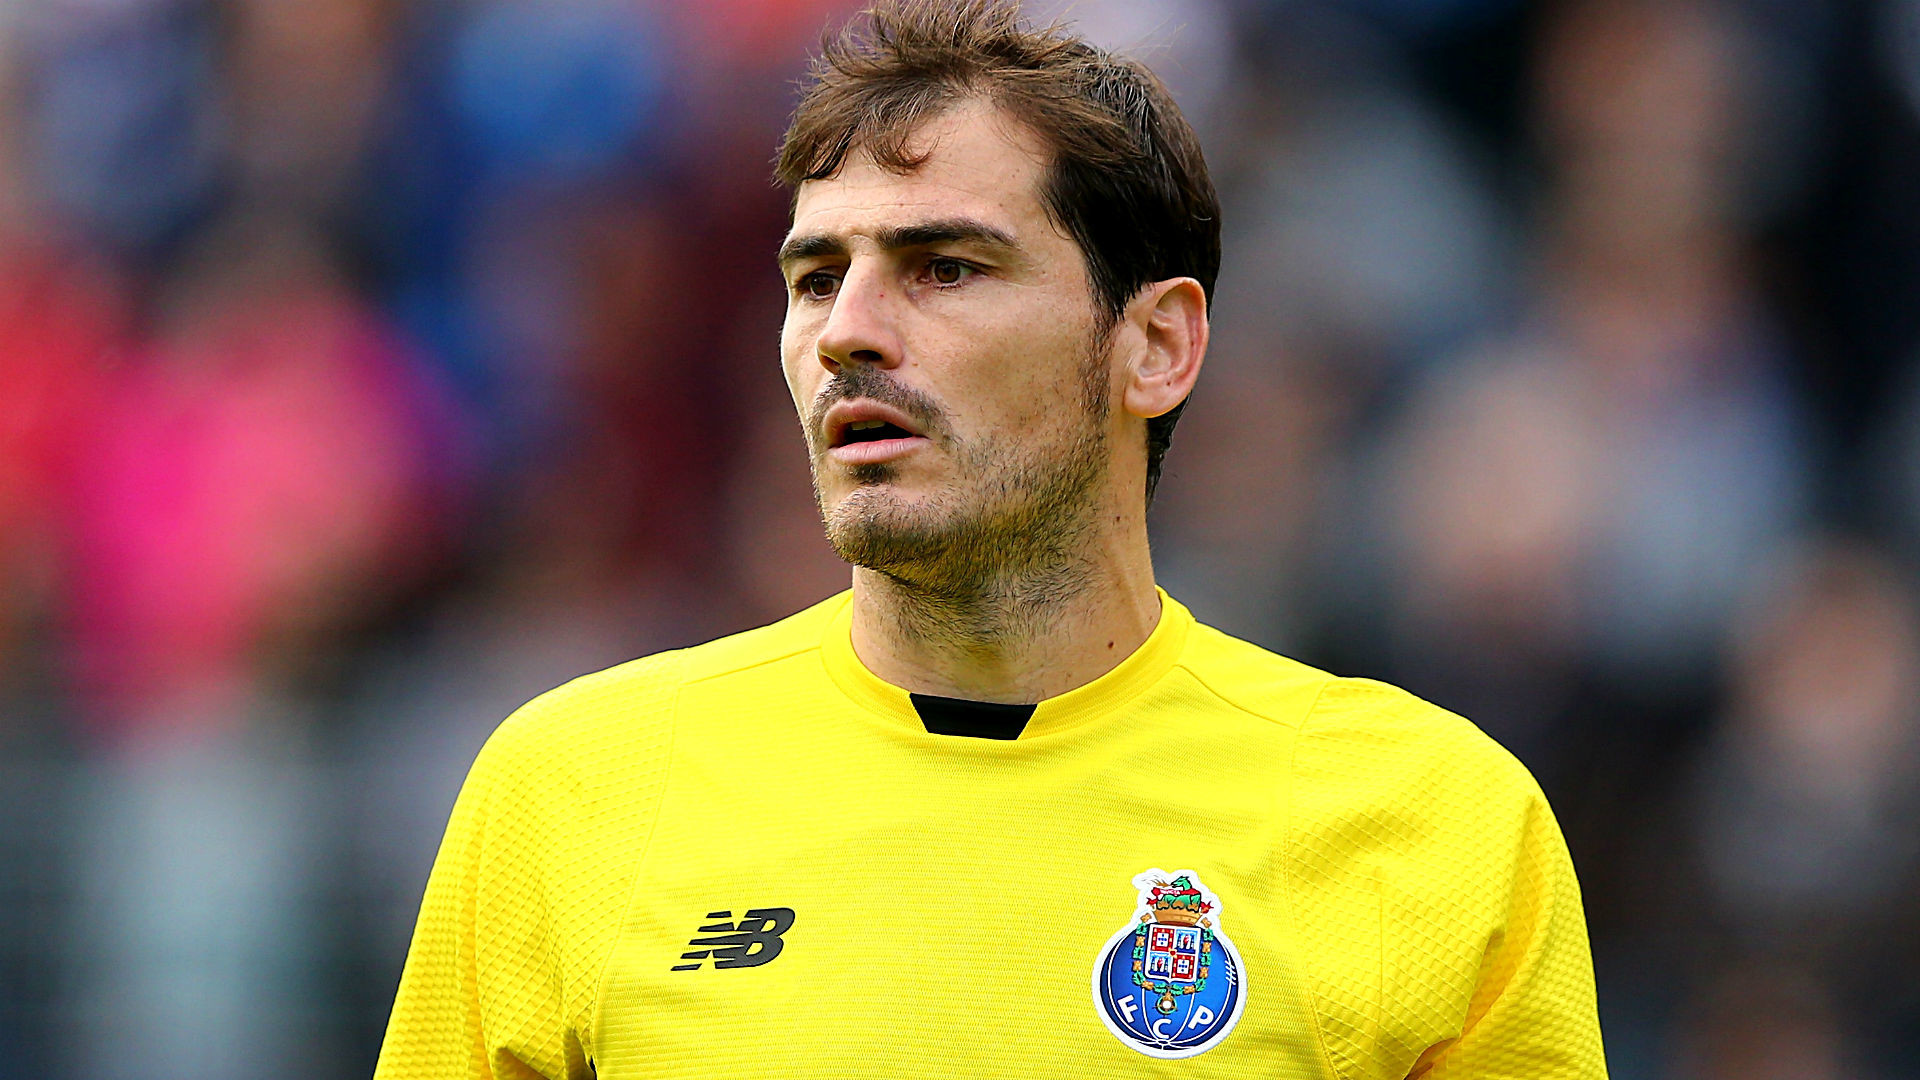 1920x1080 Iker Casillas leaves door open to U.S. move | Soccer | Sporting News